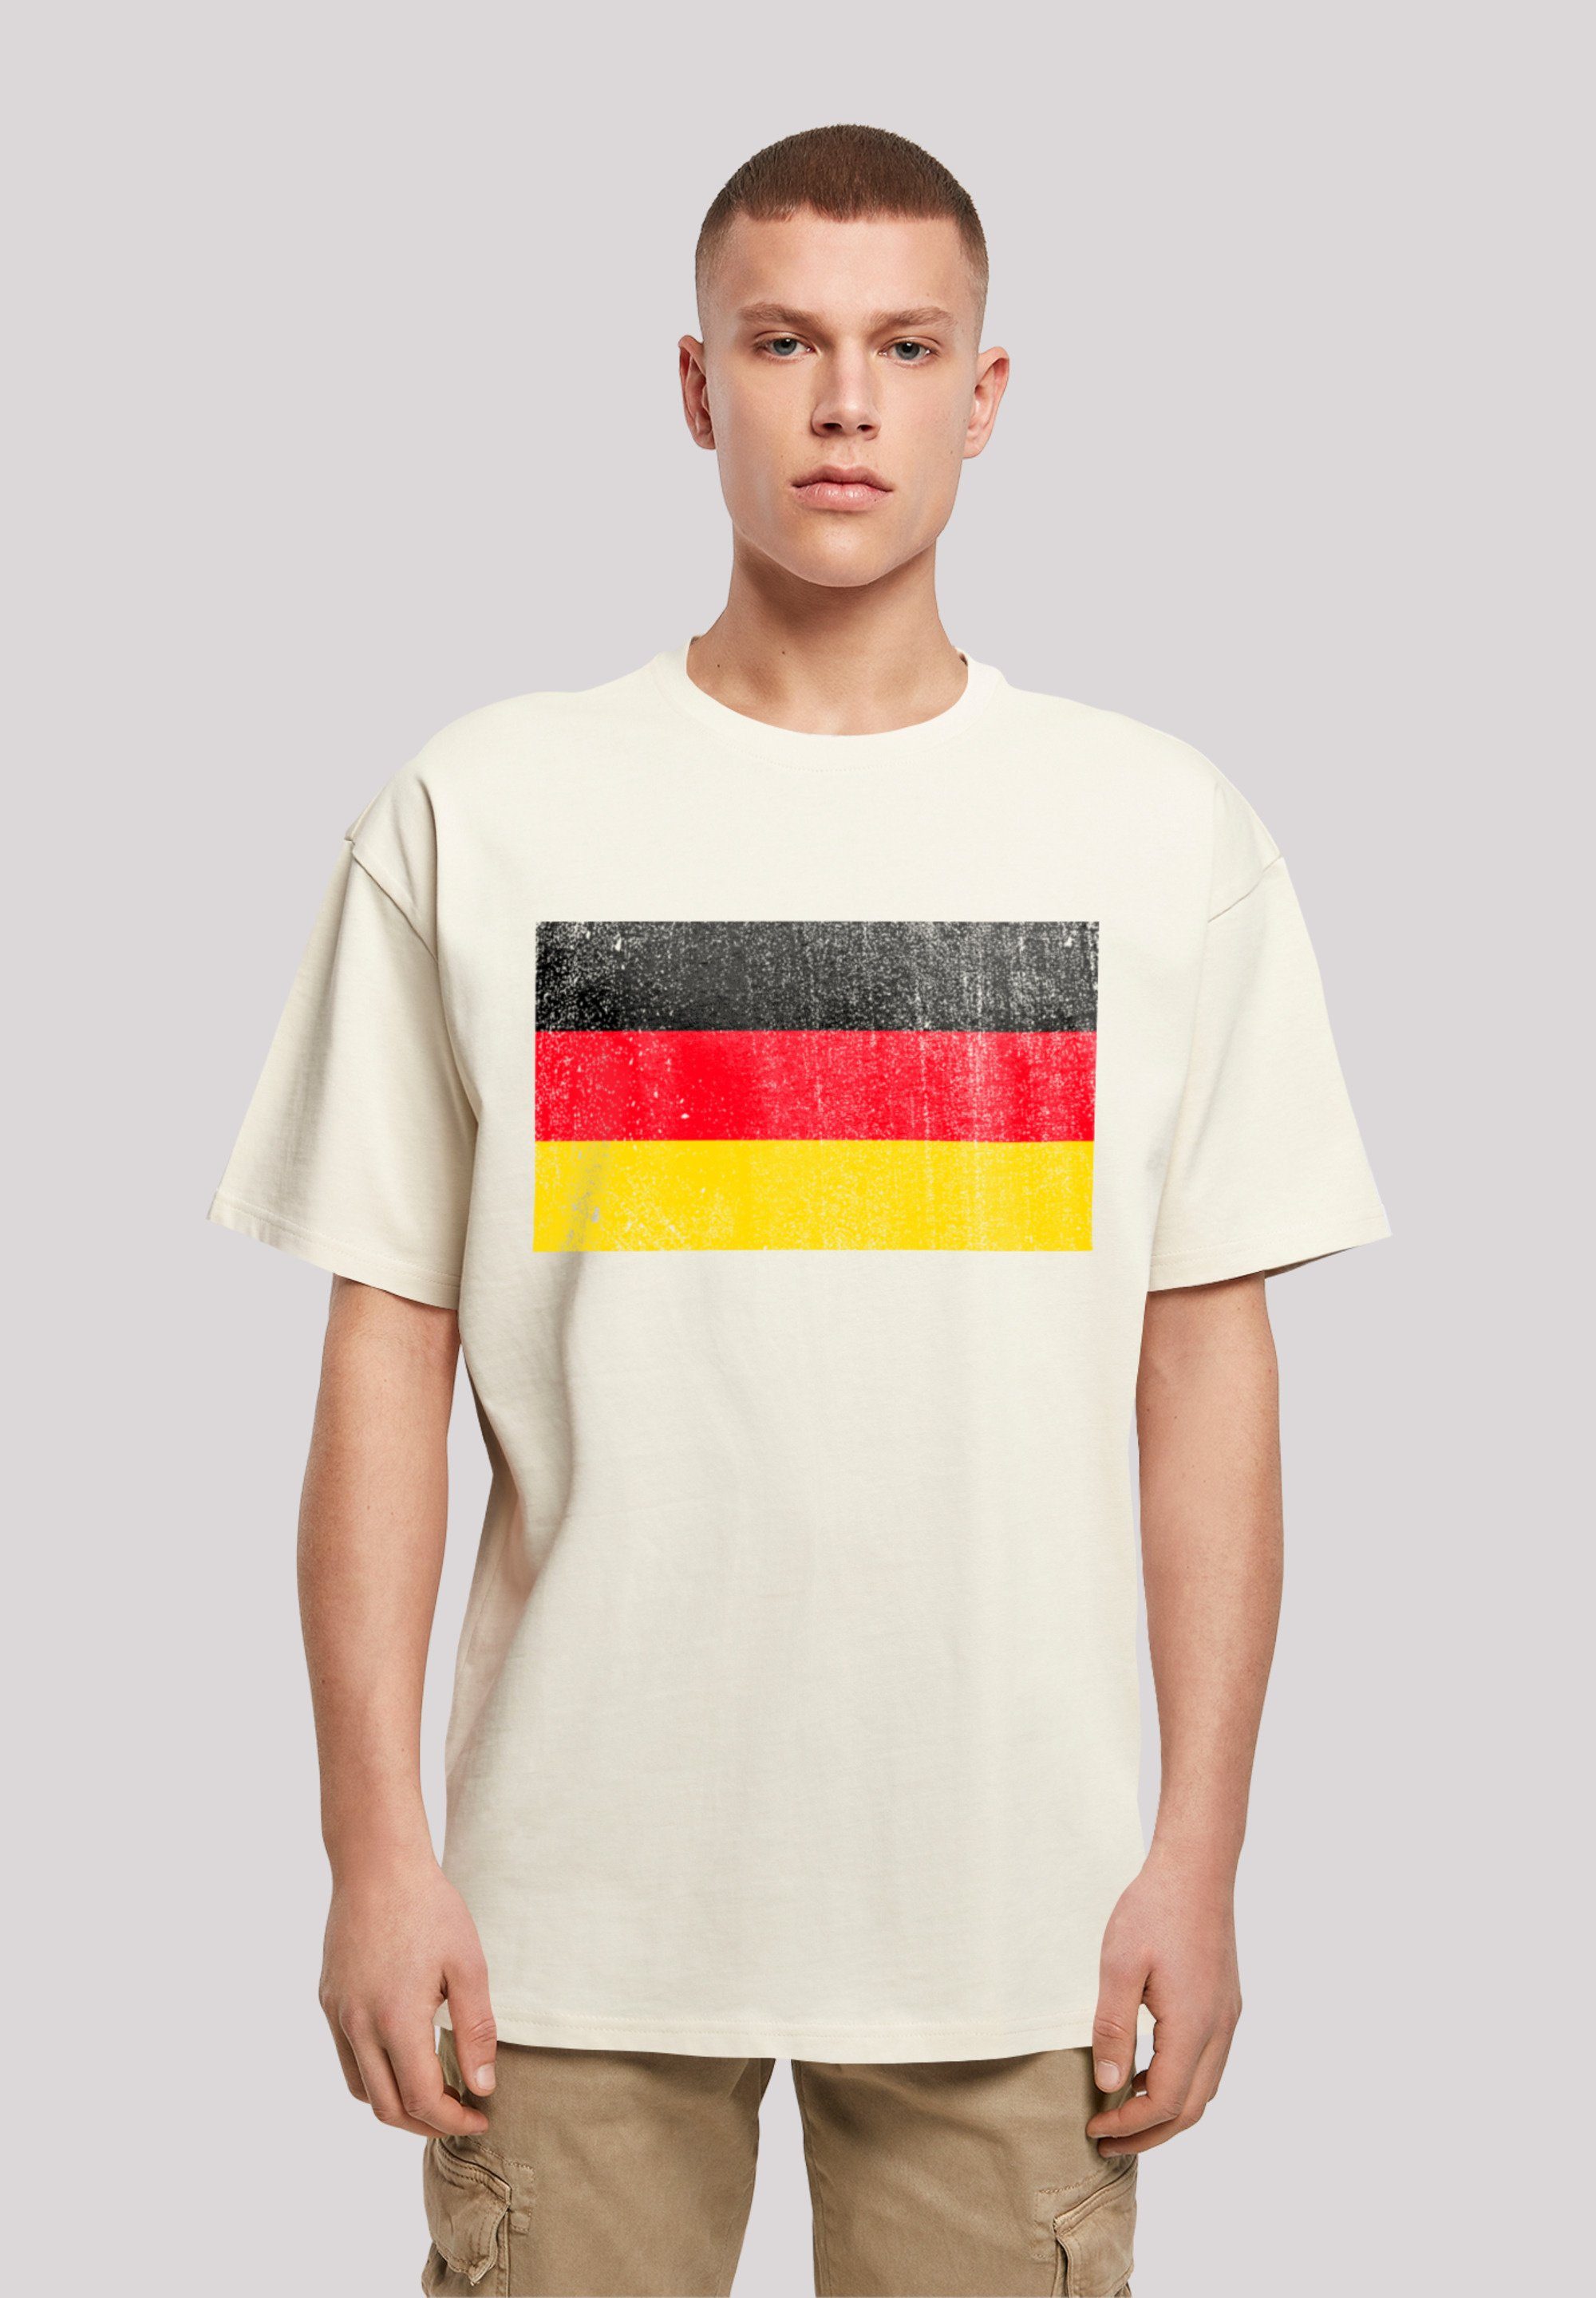 F4NT4STIC T-Shirt Germany Deutschland Flagge distressed Print sand | T-Shirts